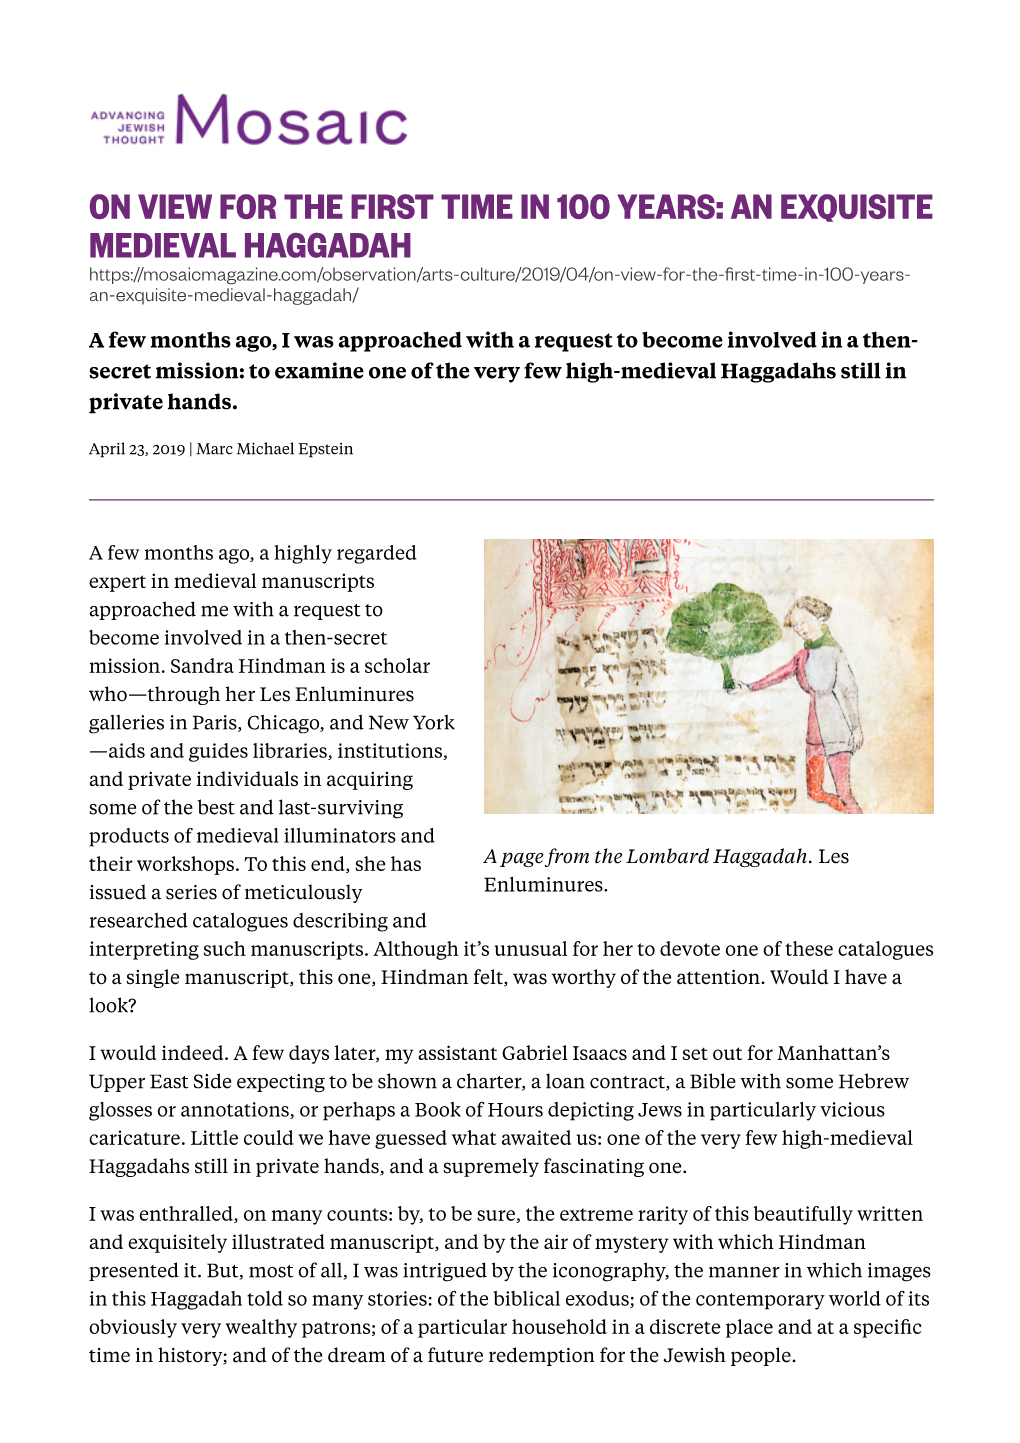 AN EXQUISITE MEDIEVAL HAGGADAH An-Exquisite-Medieval-Haggadah